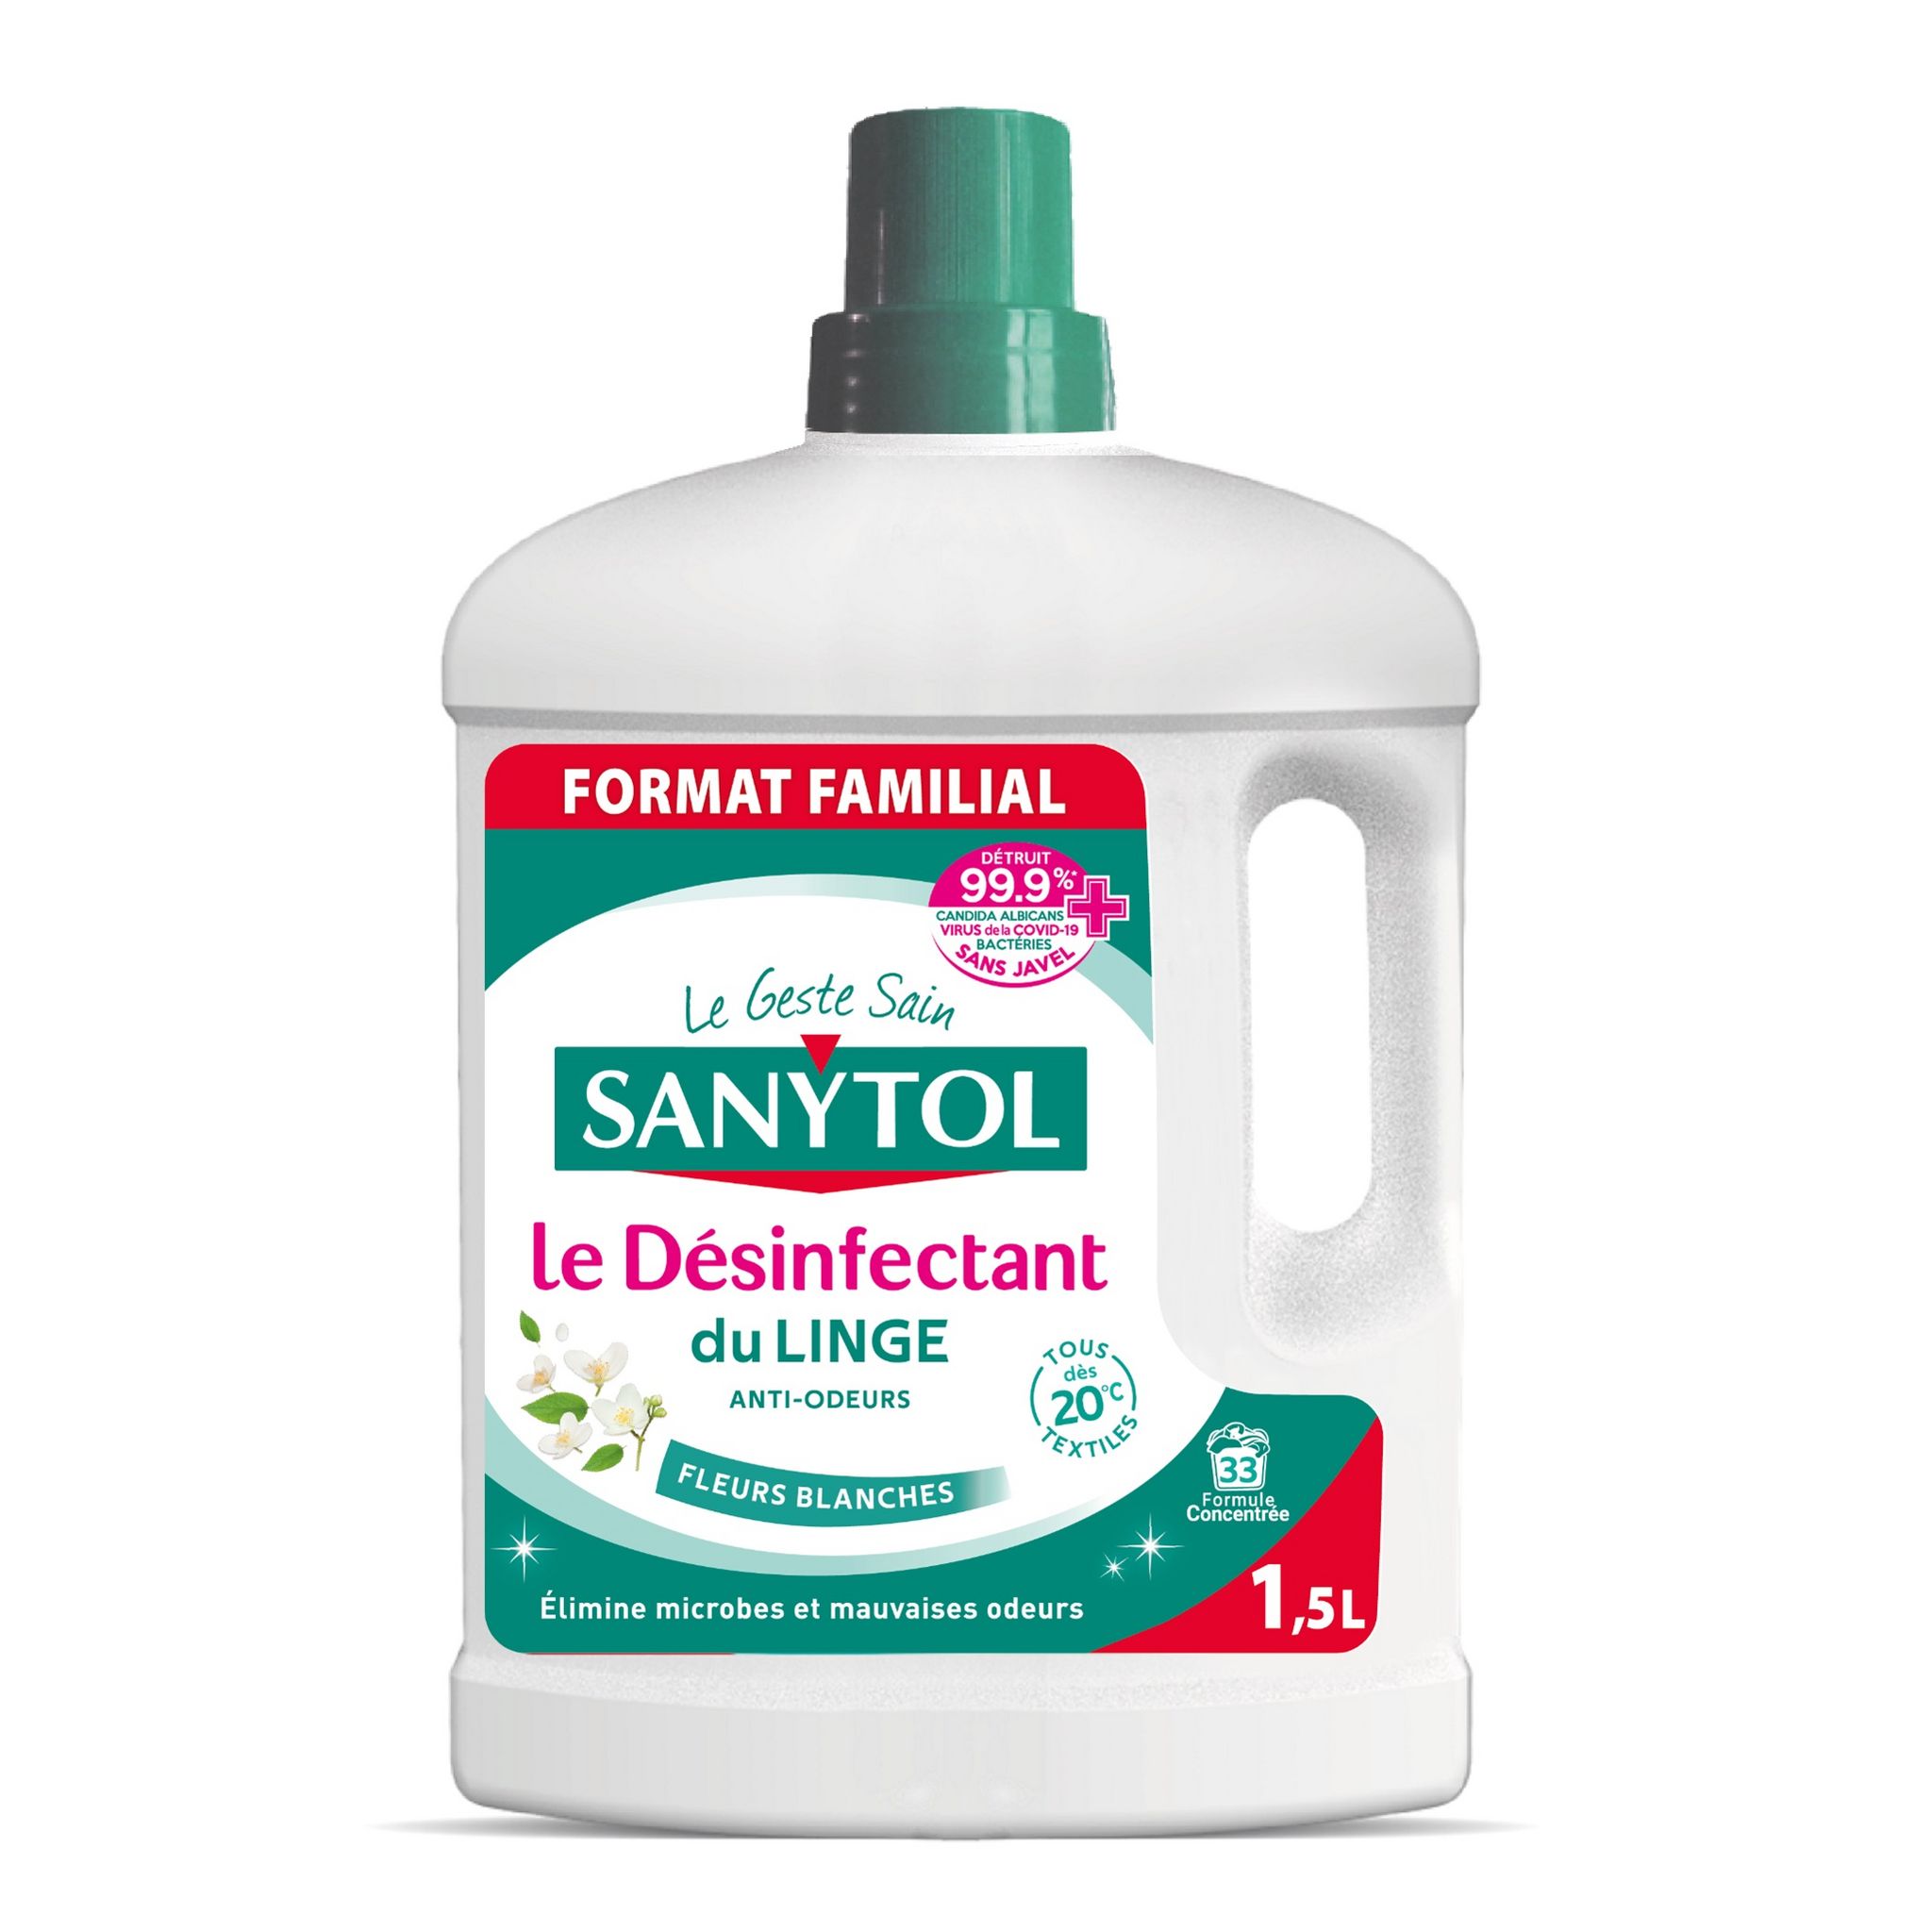 Sanytol désinfectant